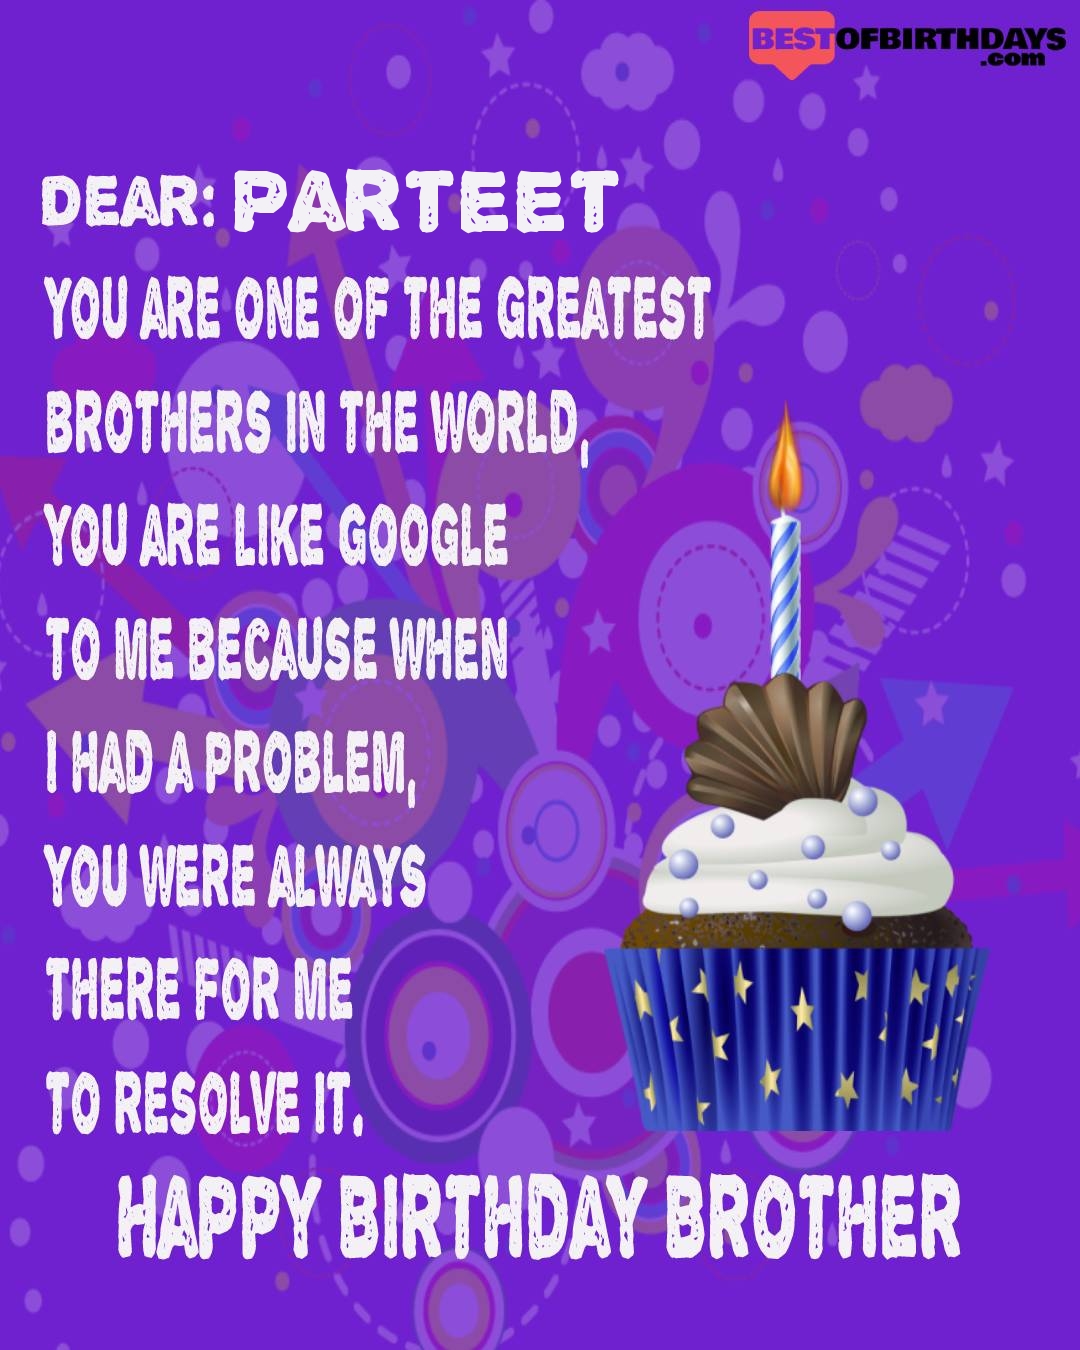 Happy birthday parteet bhai brother bro